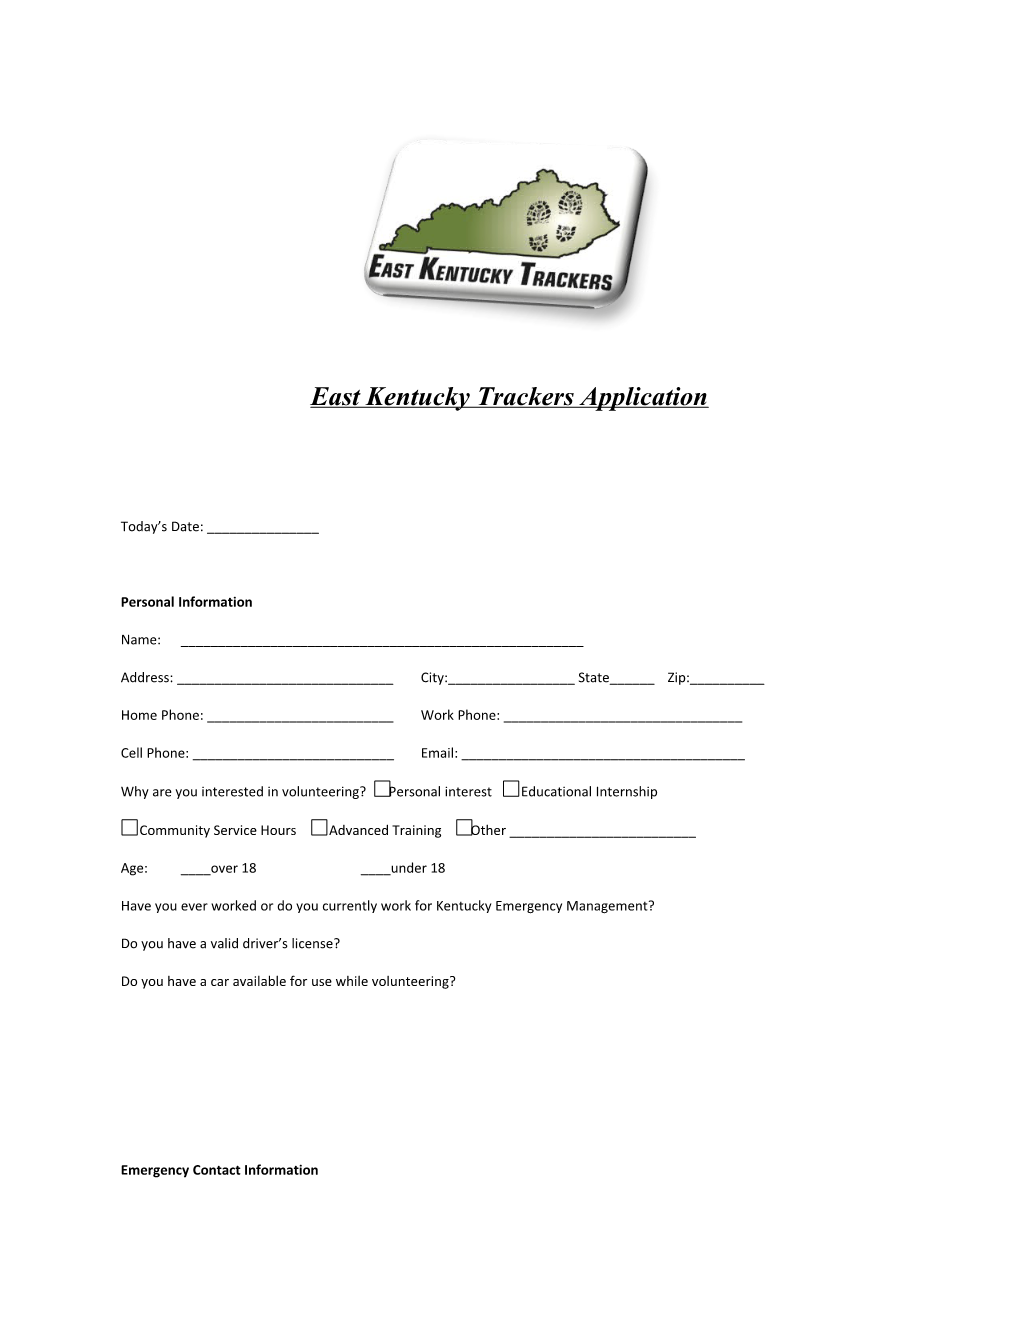 East Kentucky Trackers Application